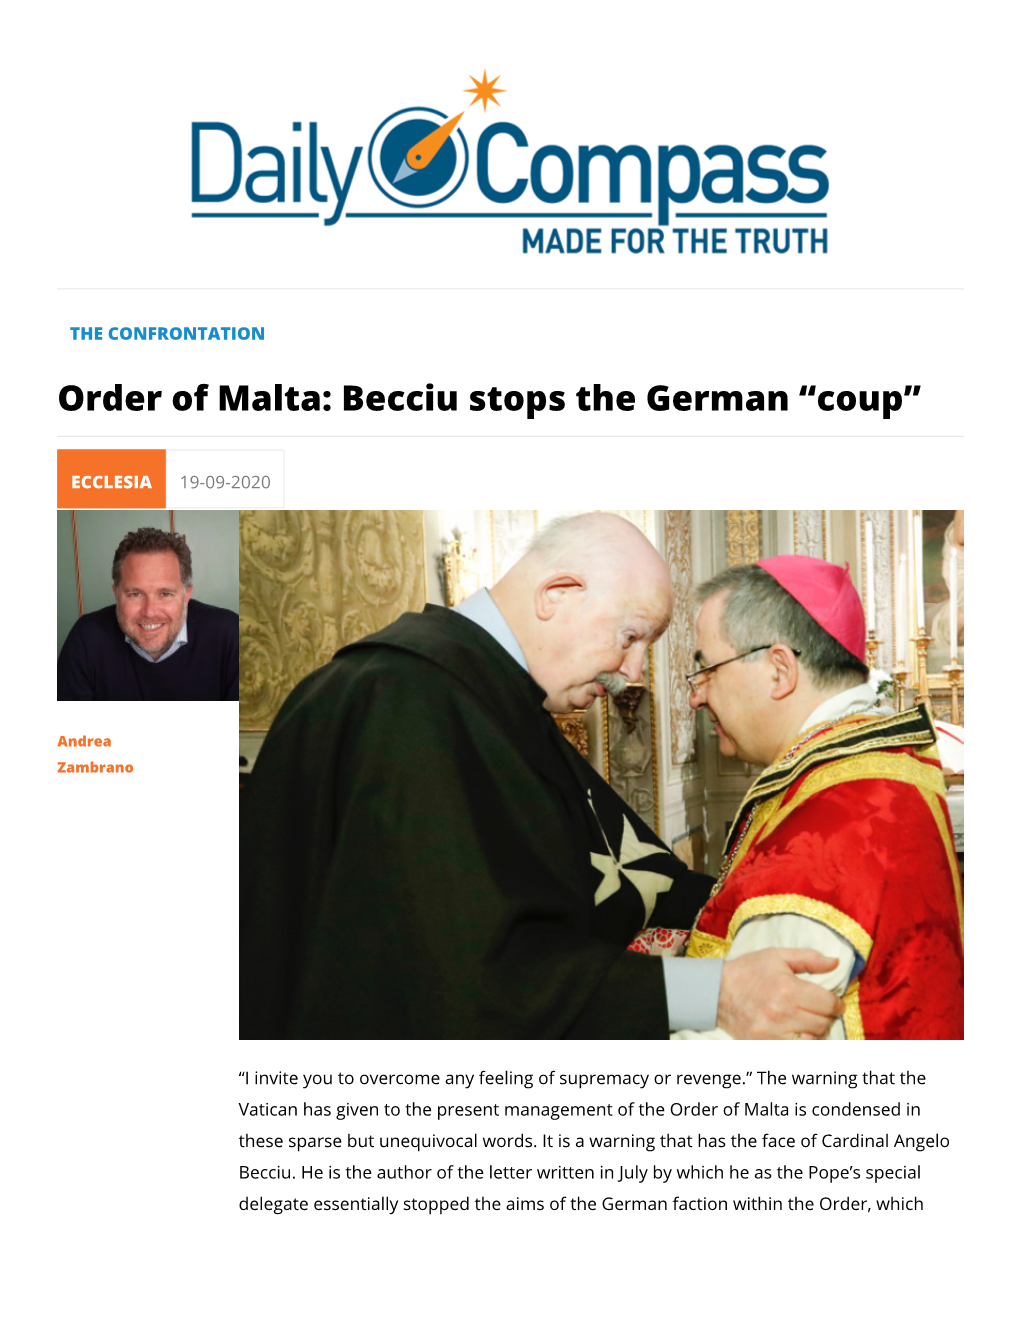 Order of Malta: Becciu Stops the German “Coup”